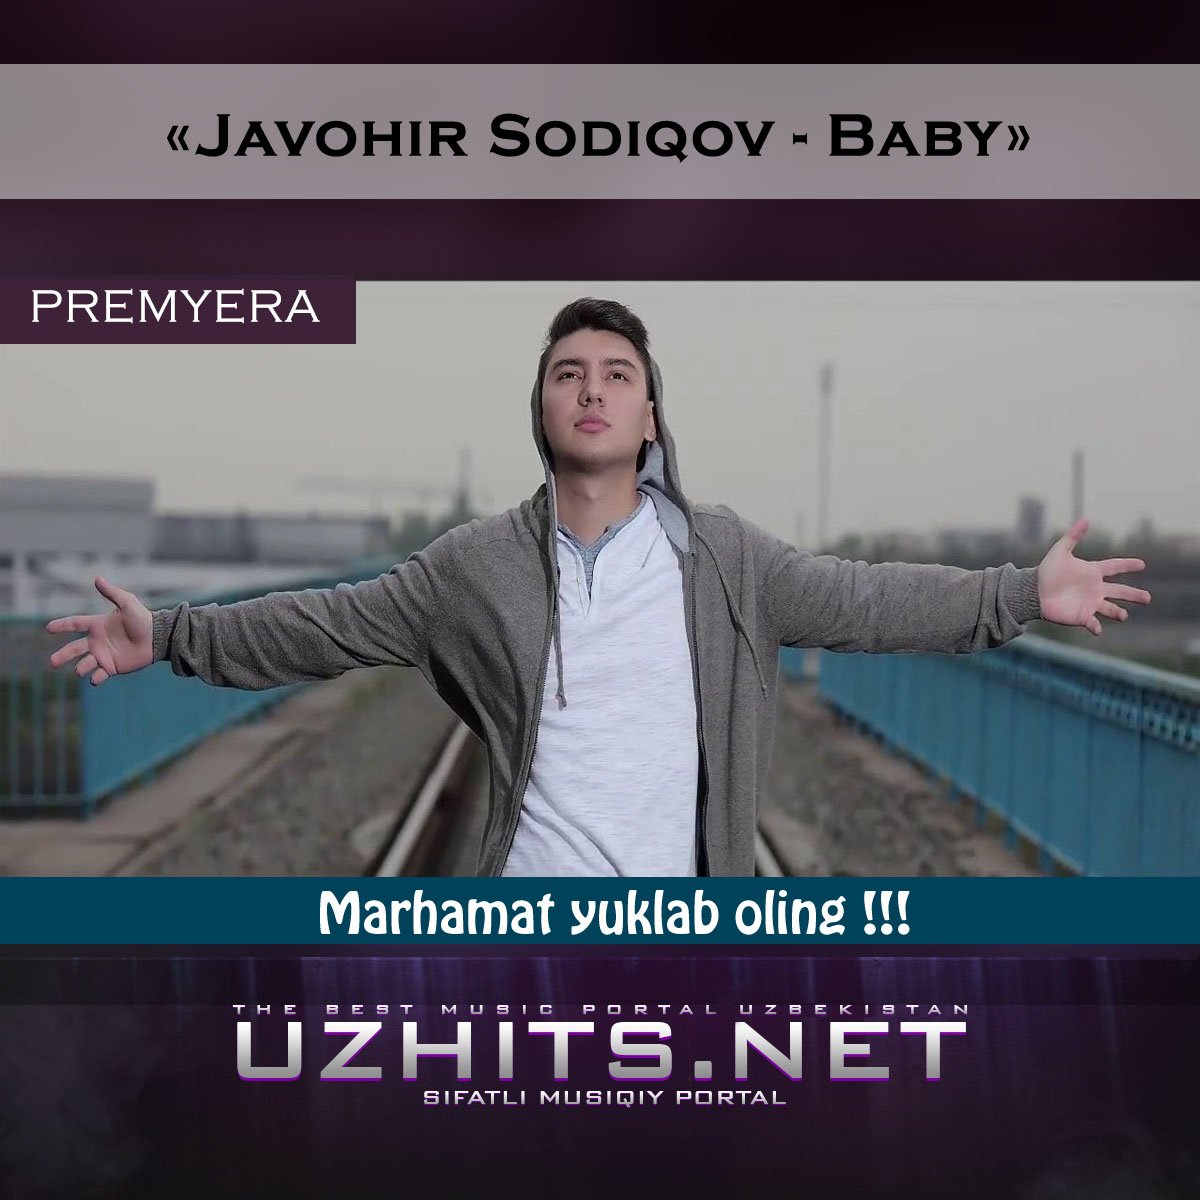 Javohir Sodiqov  - Baby